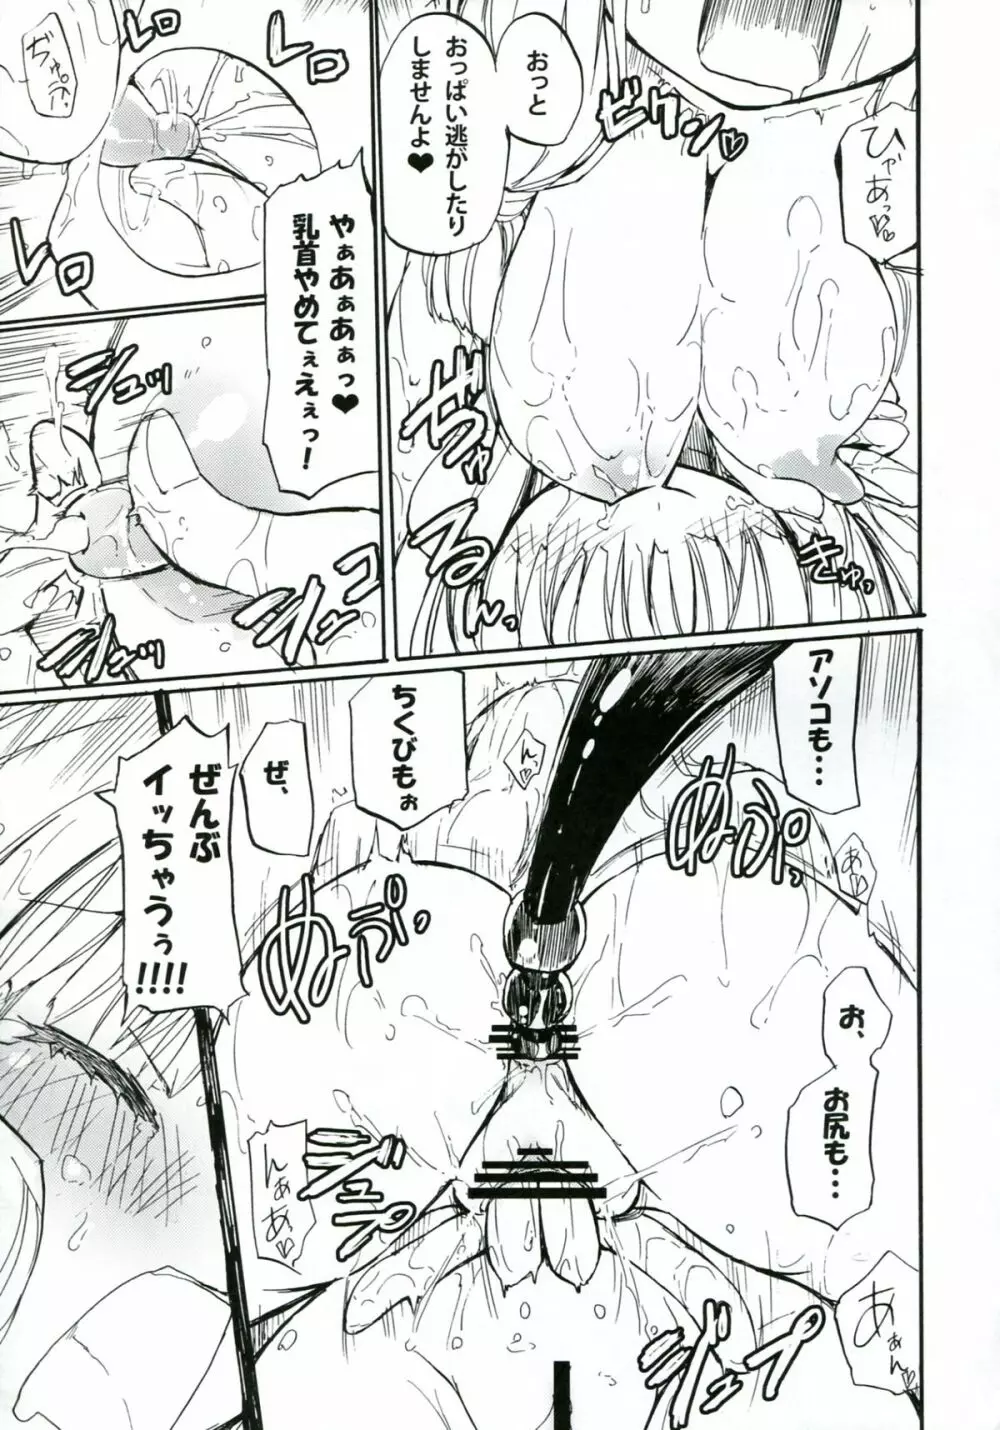 Homuraya Milk ★ Collection 2 - page65